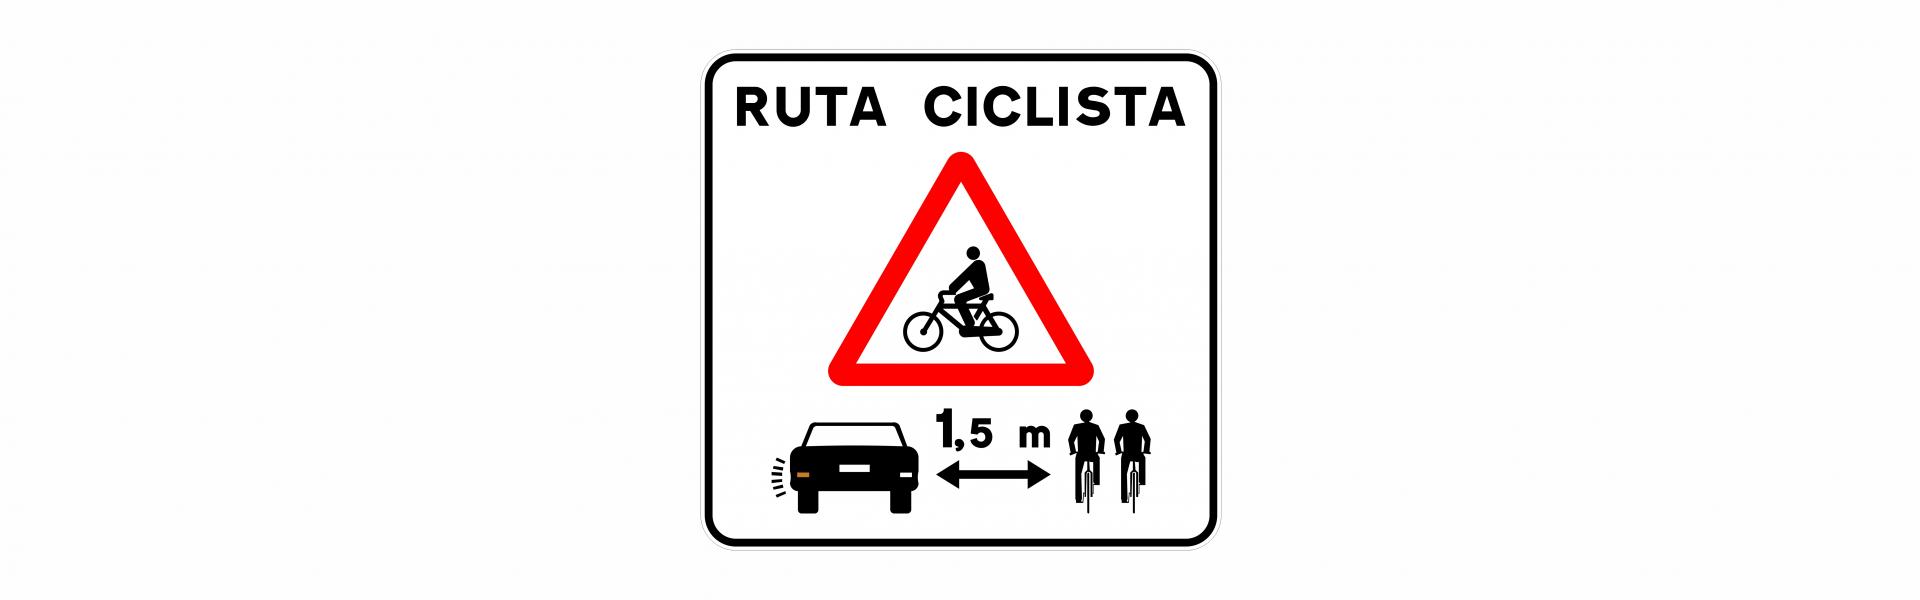 grupo villar panel bicis señalización señal ciclistas